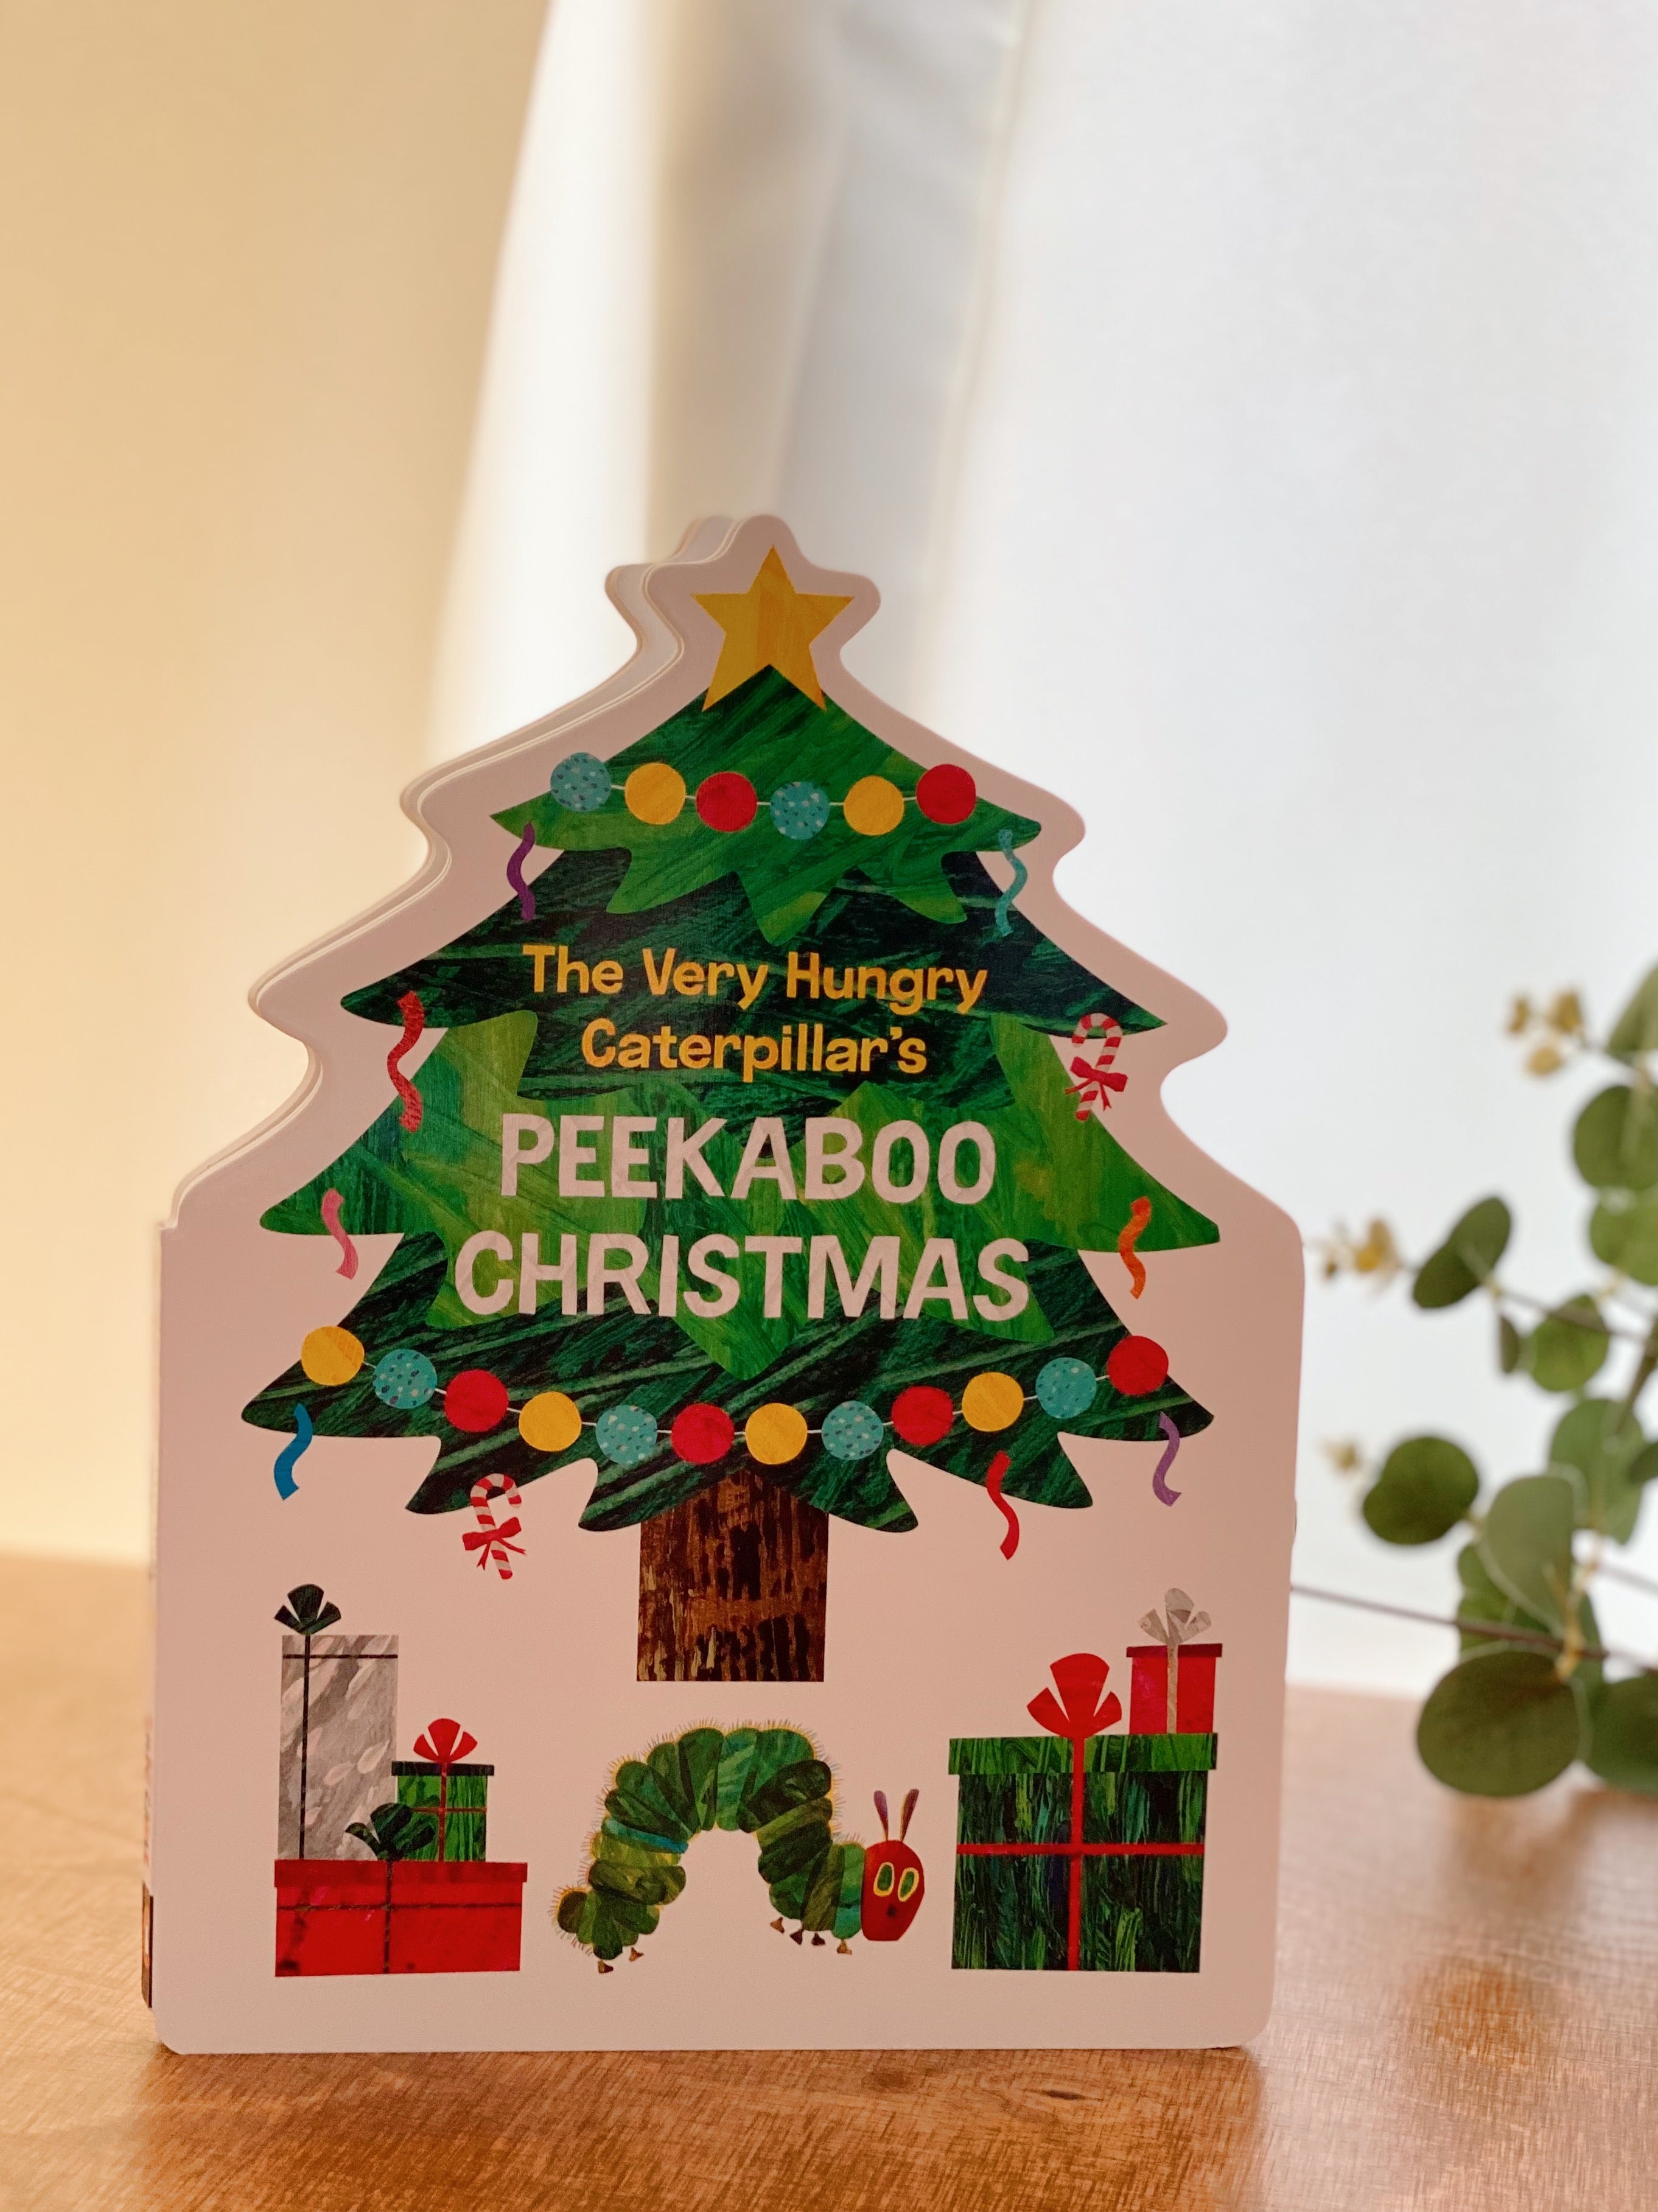 The Very Hungry Caterpillar's Peekaboo Christmas